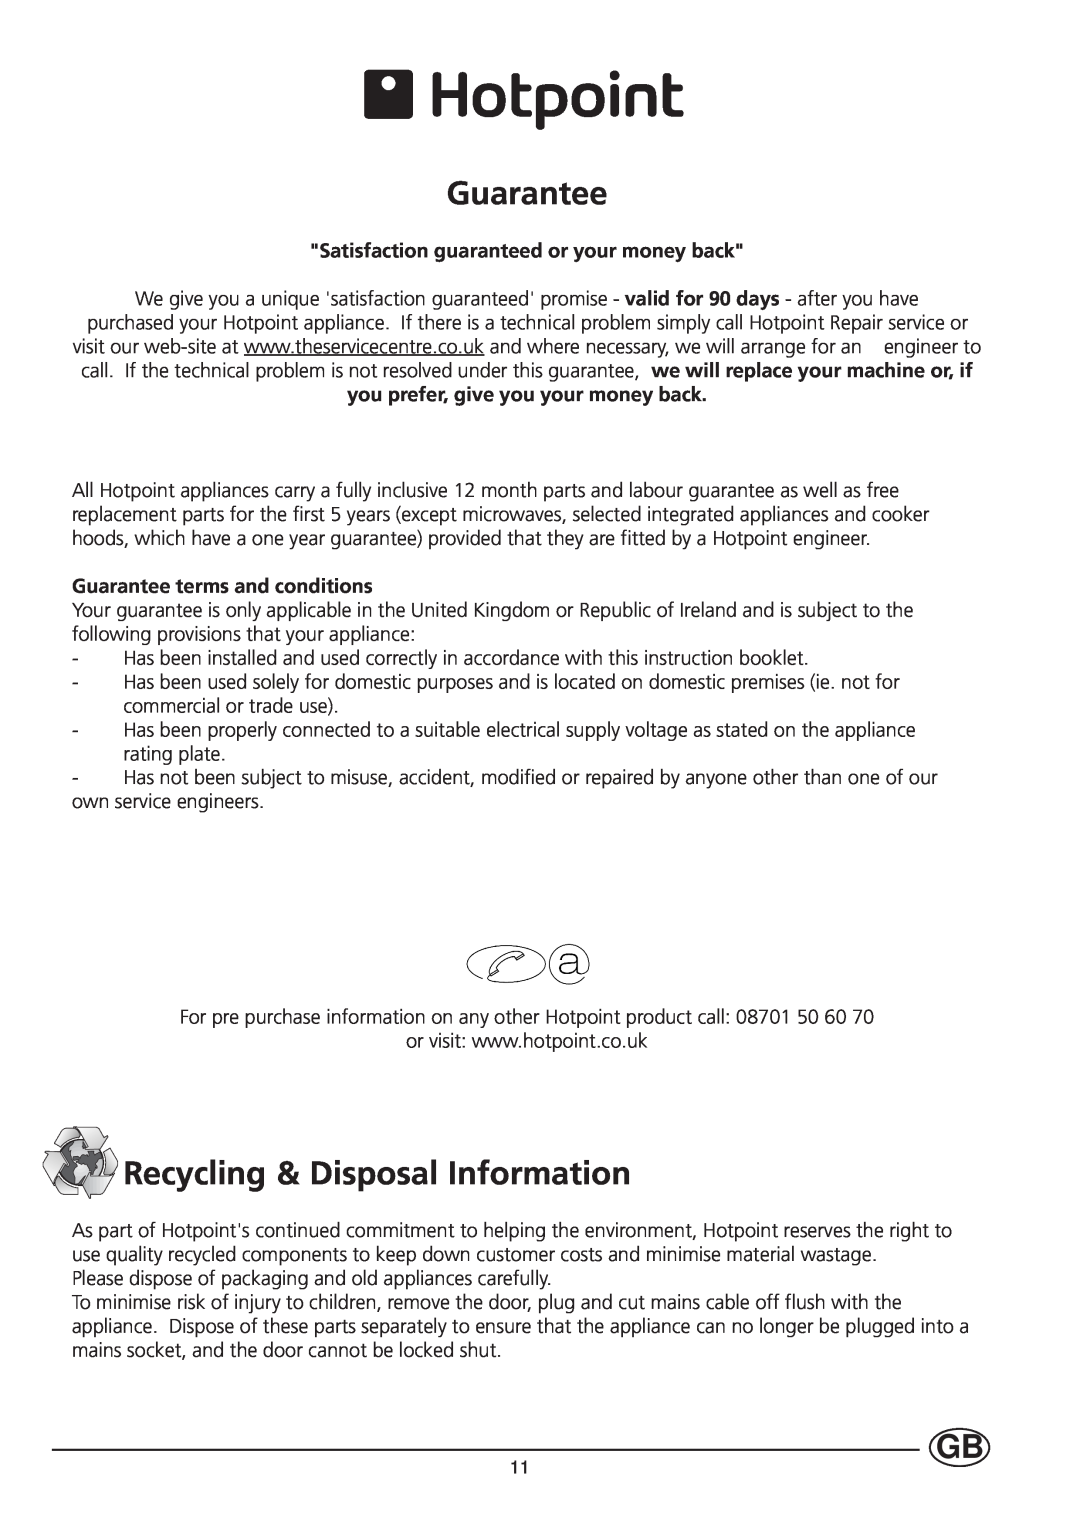 Hotpoint HUL161I manual Guarantee, Recycling & Disposal Information, Satisfaction guaranteed or your money back 